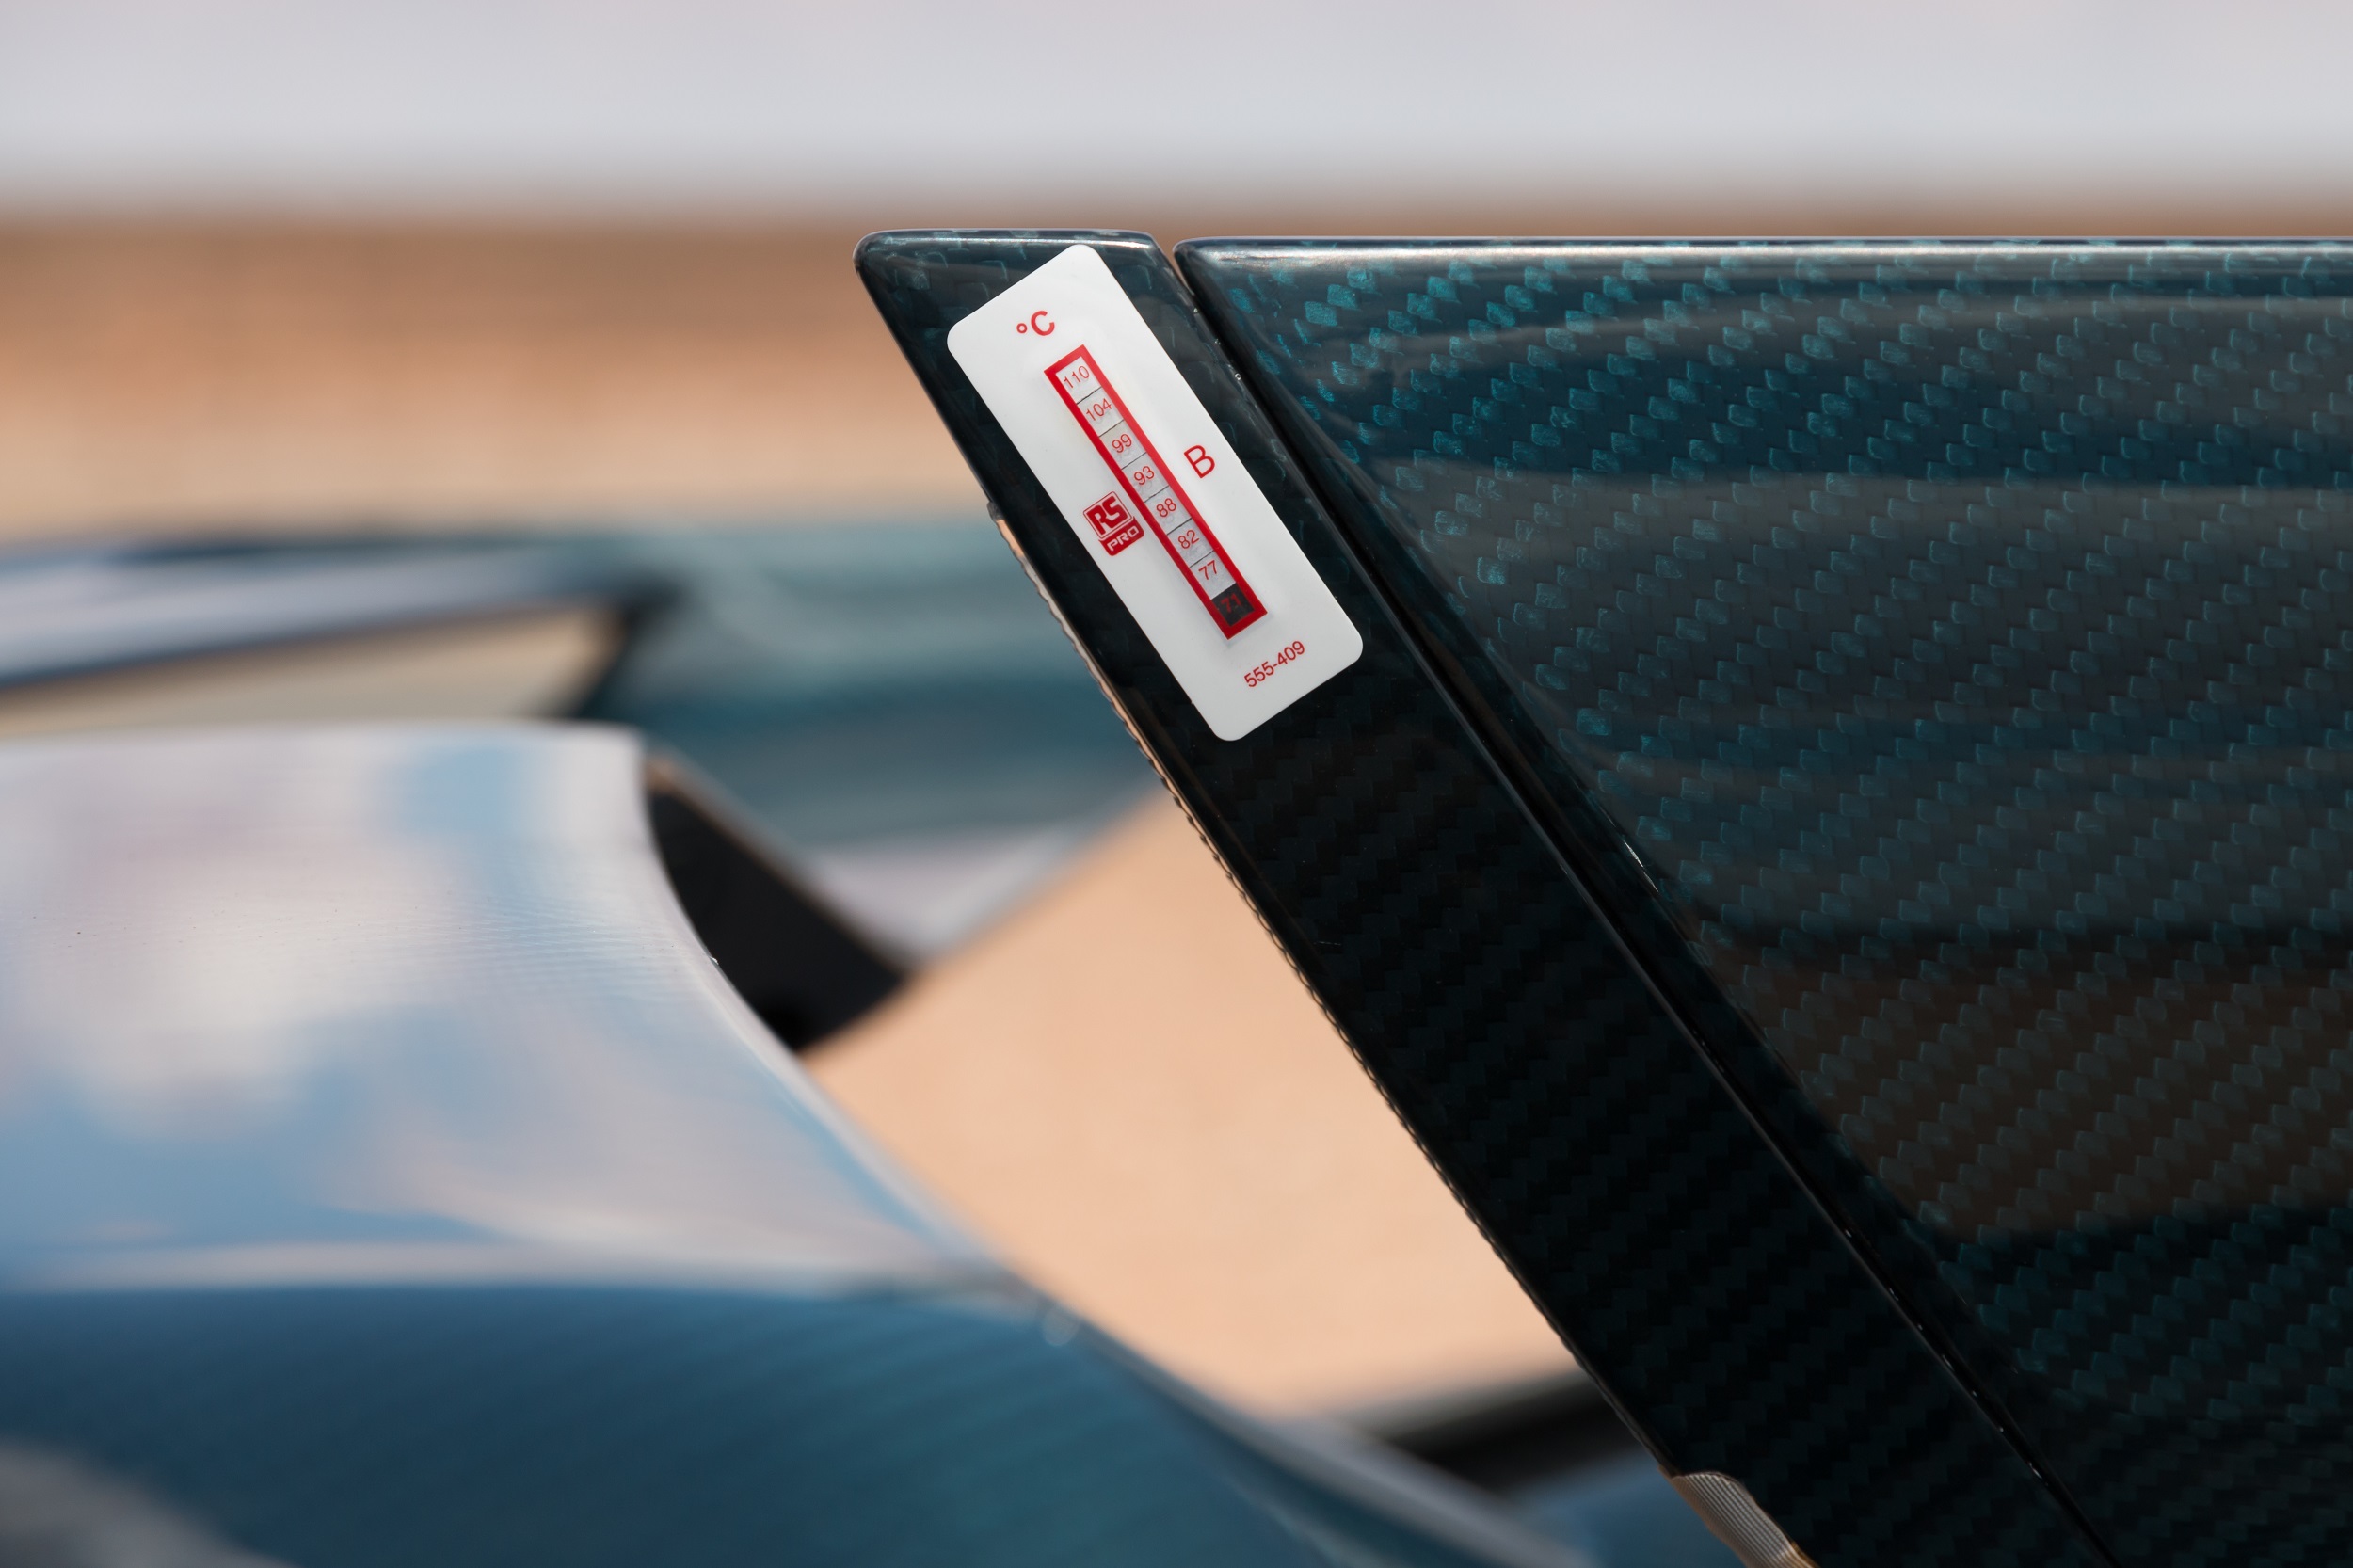 Bugatti Divo development and testing Photo Gallery | Autoblog